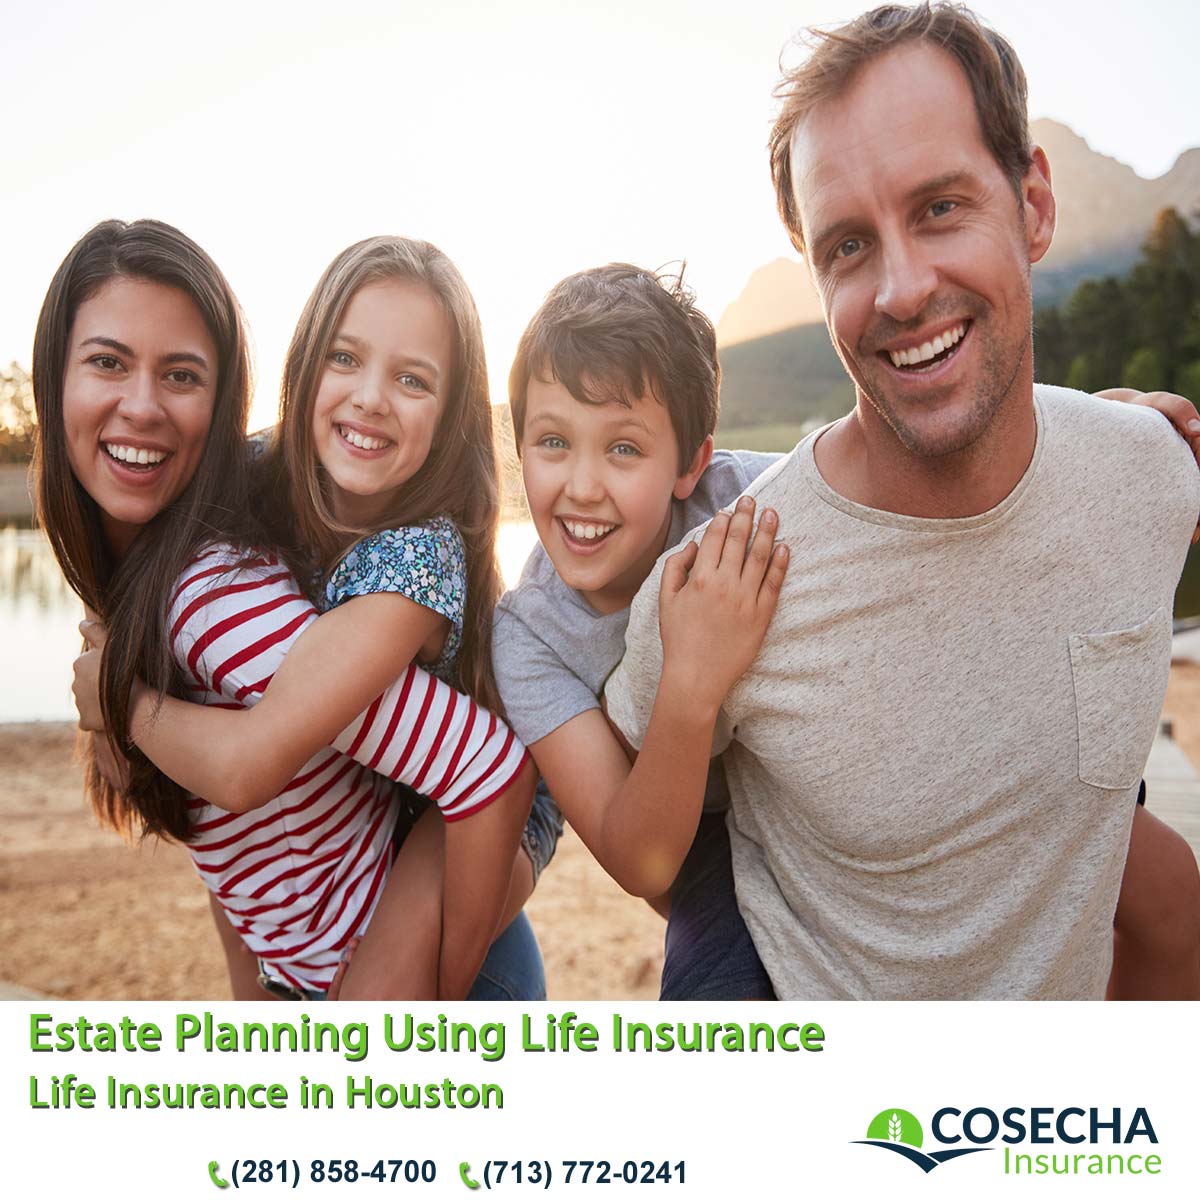 23 Life Insurance in Houston